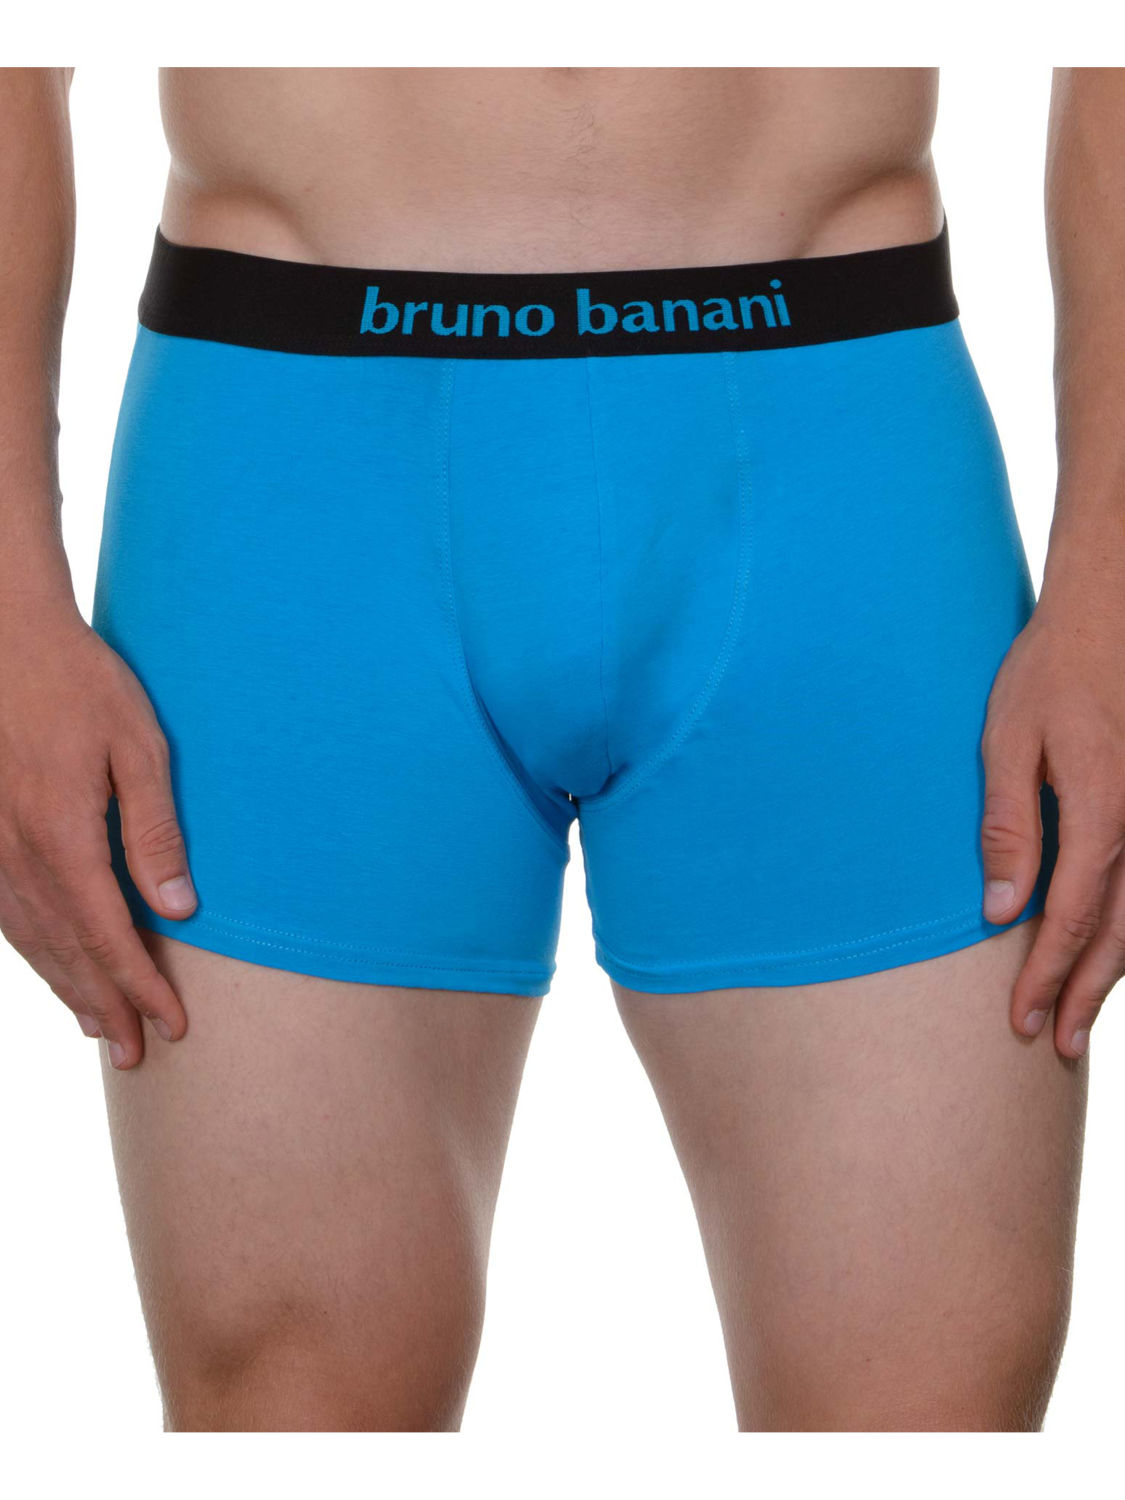 Bruno Banani Flowing 2Pack Short blau/schwarz